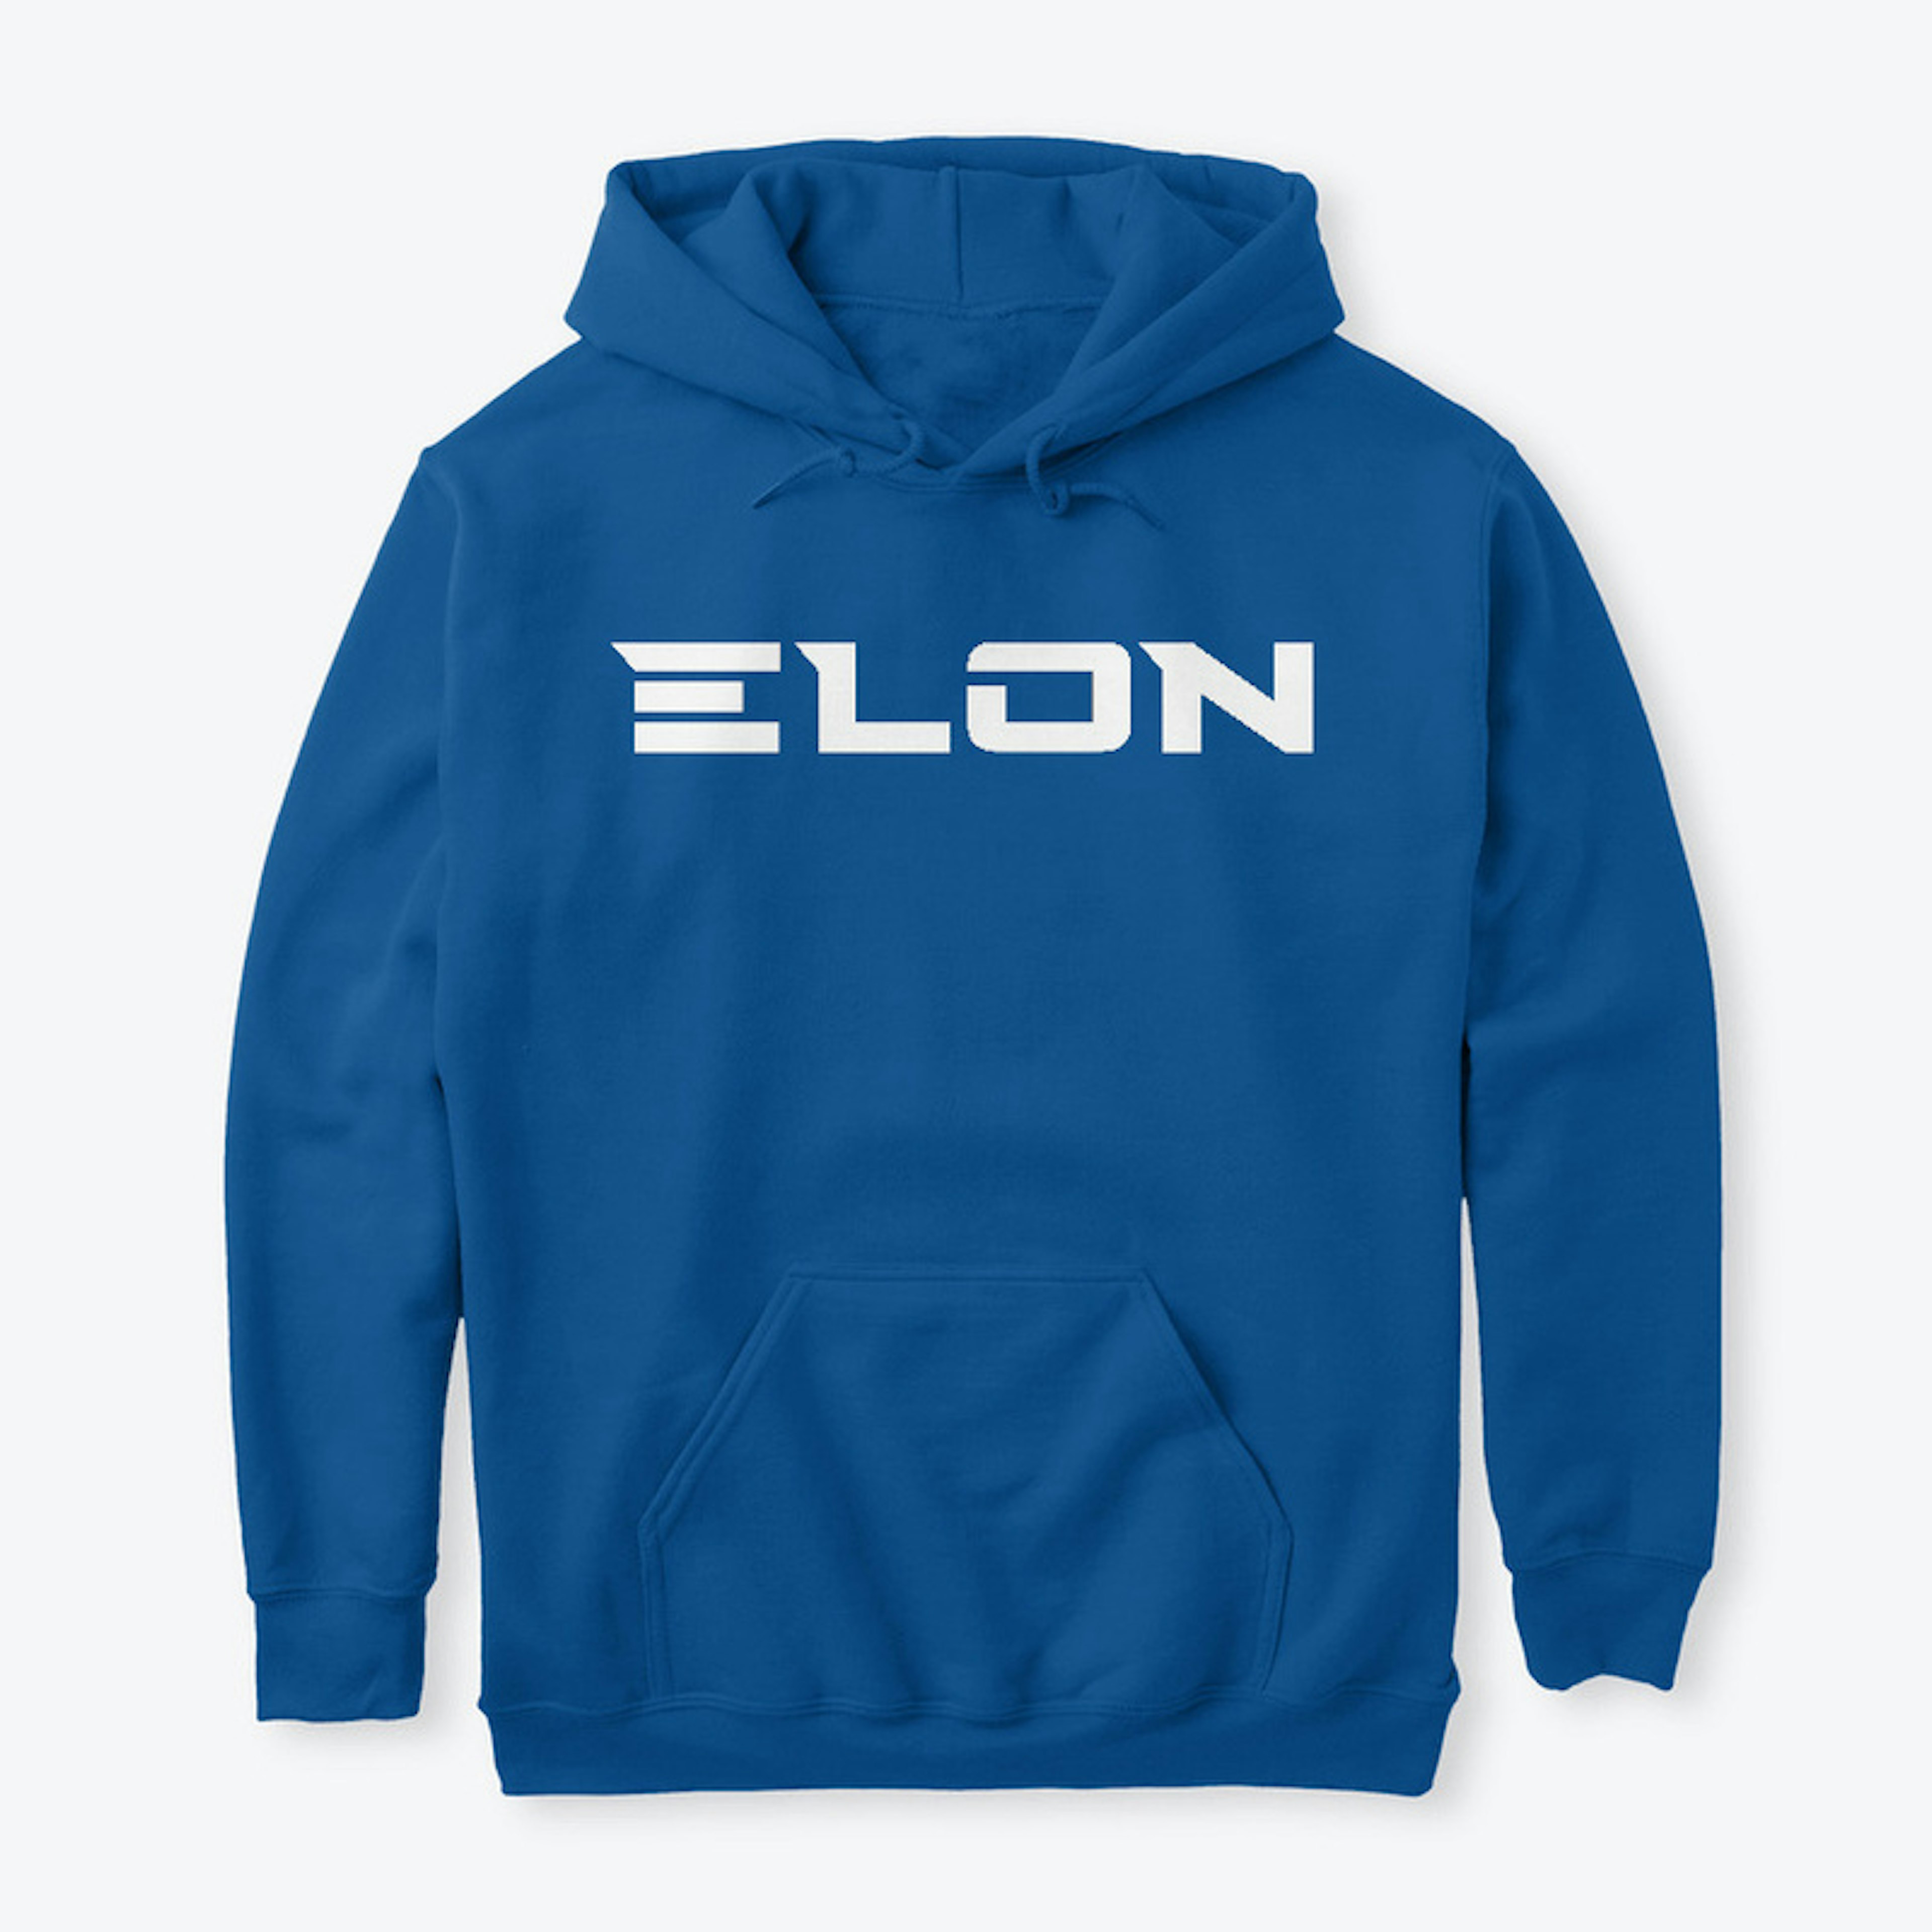 ELON - The Man - The Brand